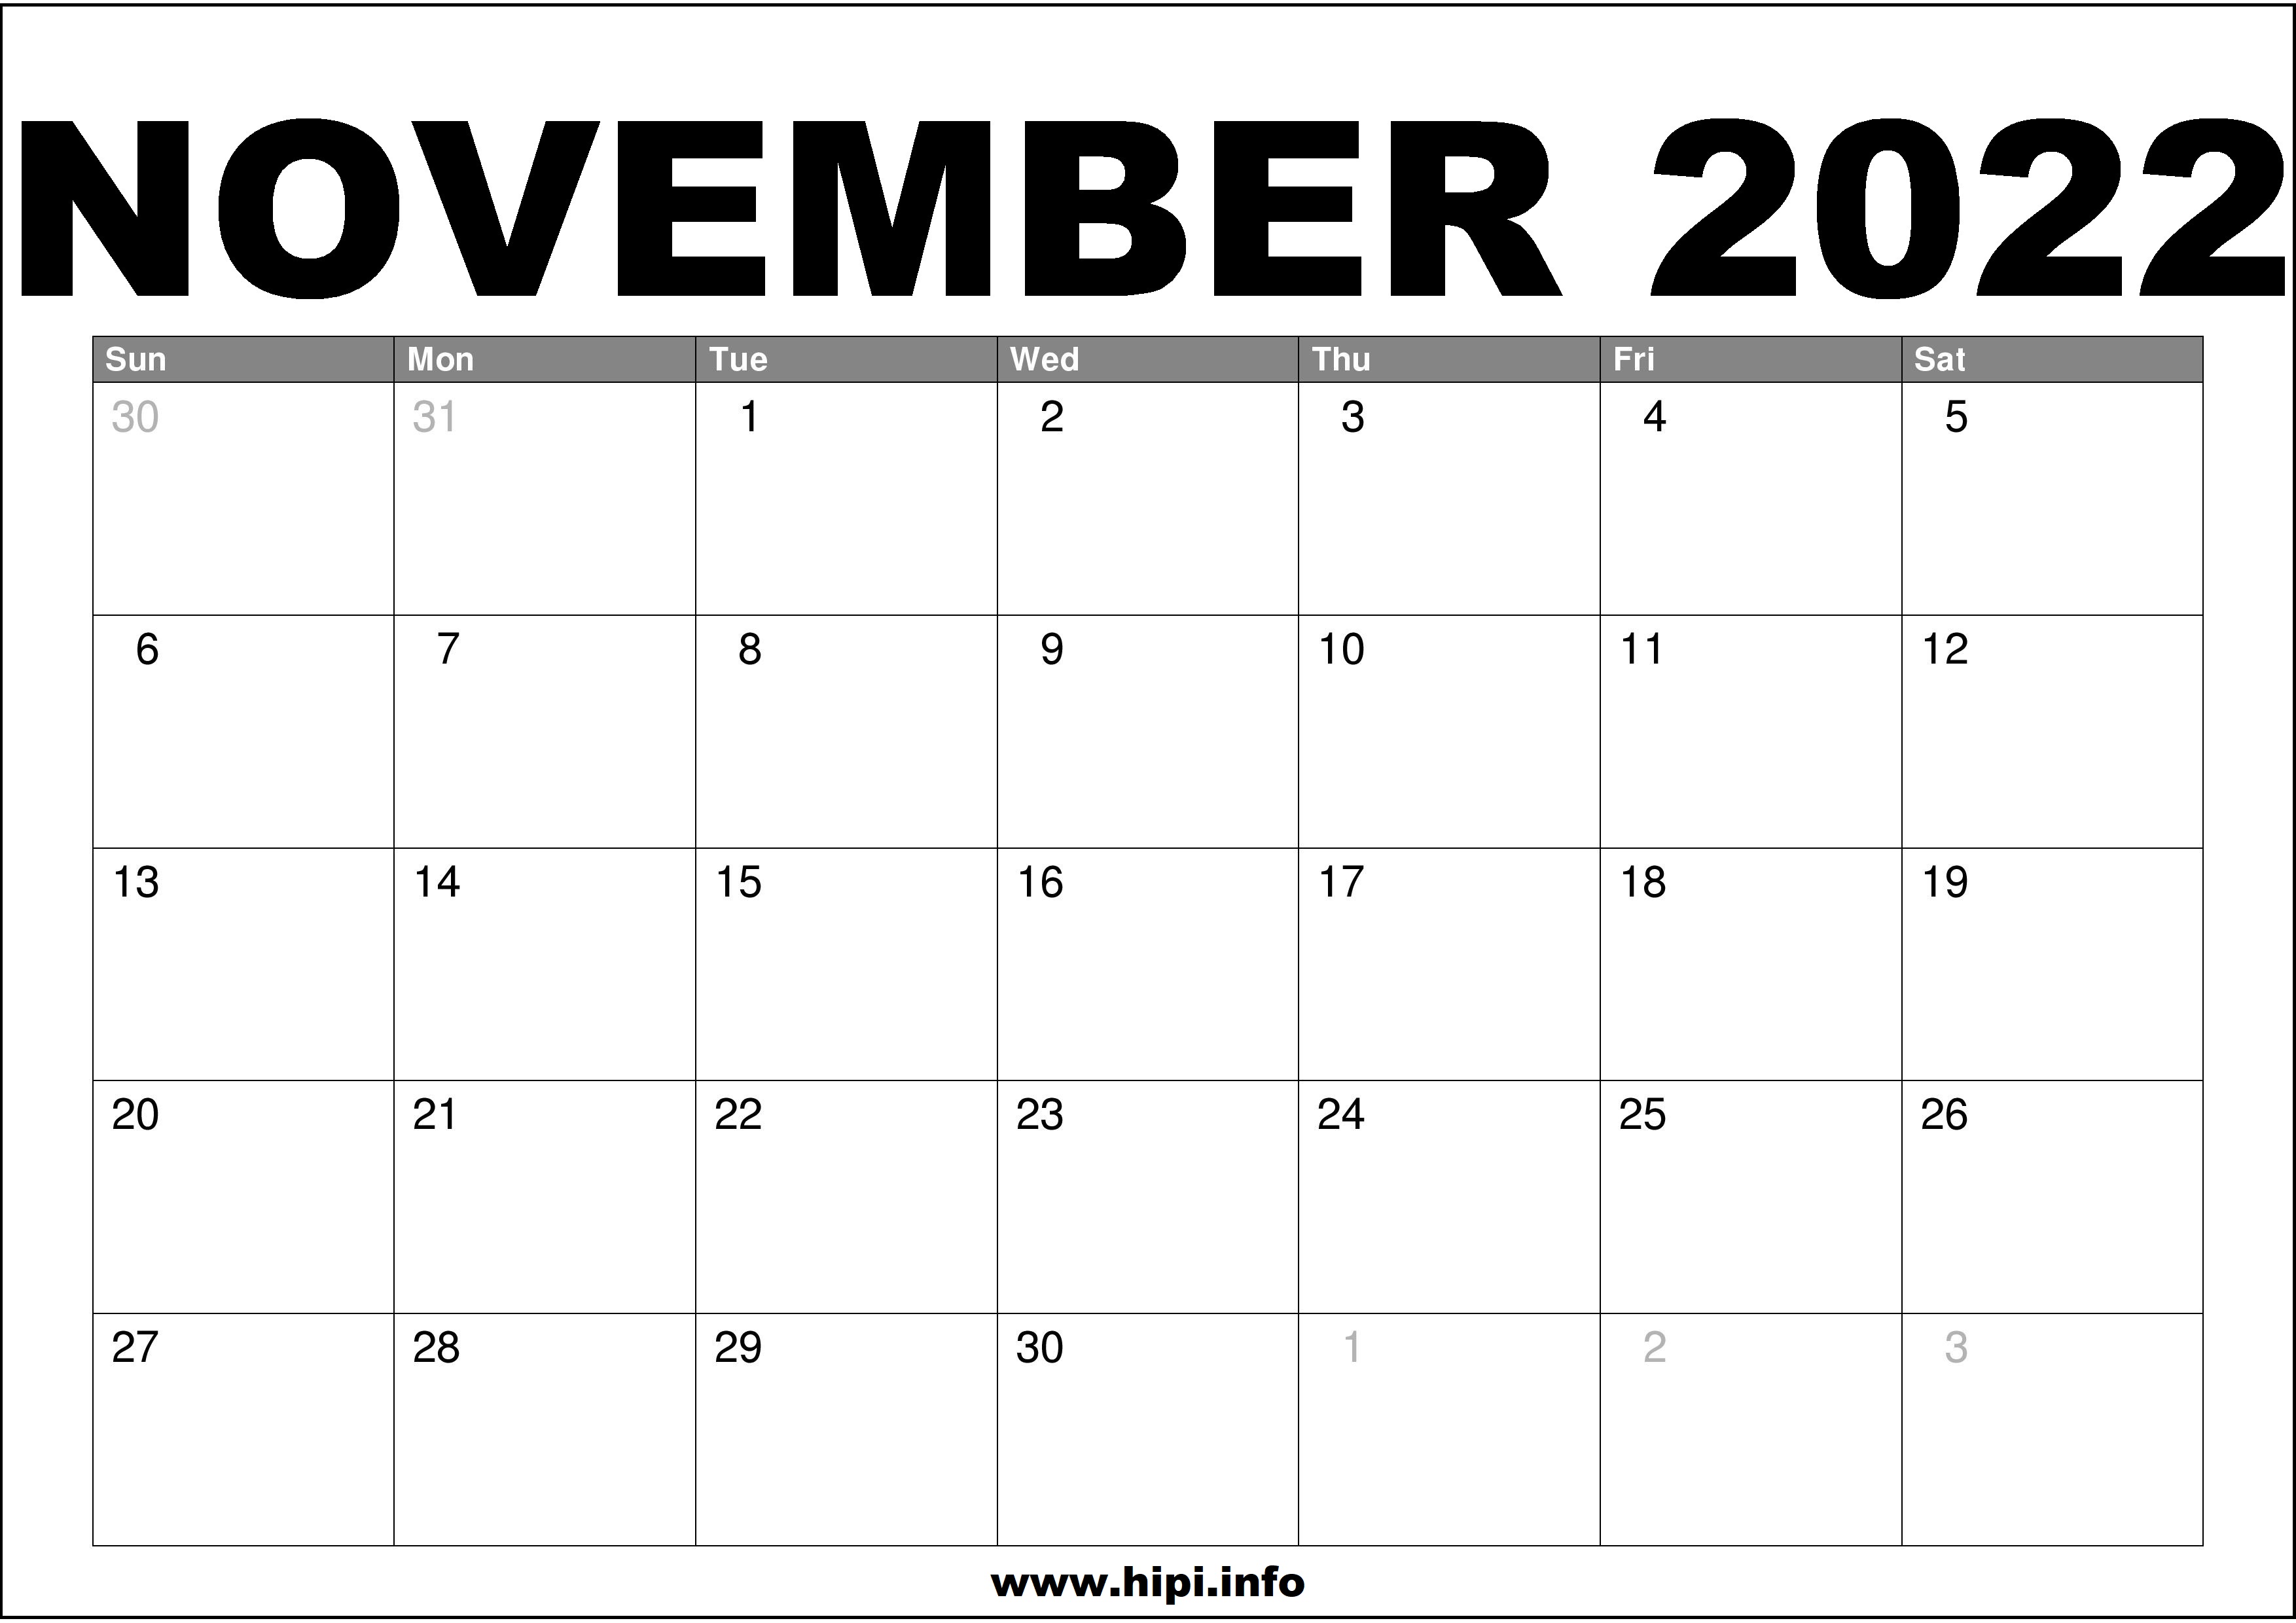 Free Printable Calendar November 2022 November 2022 Calendar Printable Free - Hipi.info | Calendars Printable Free